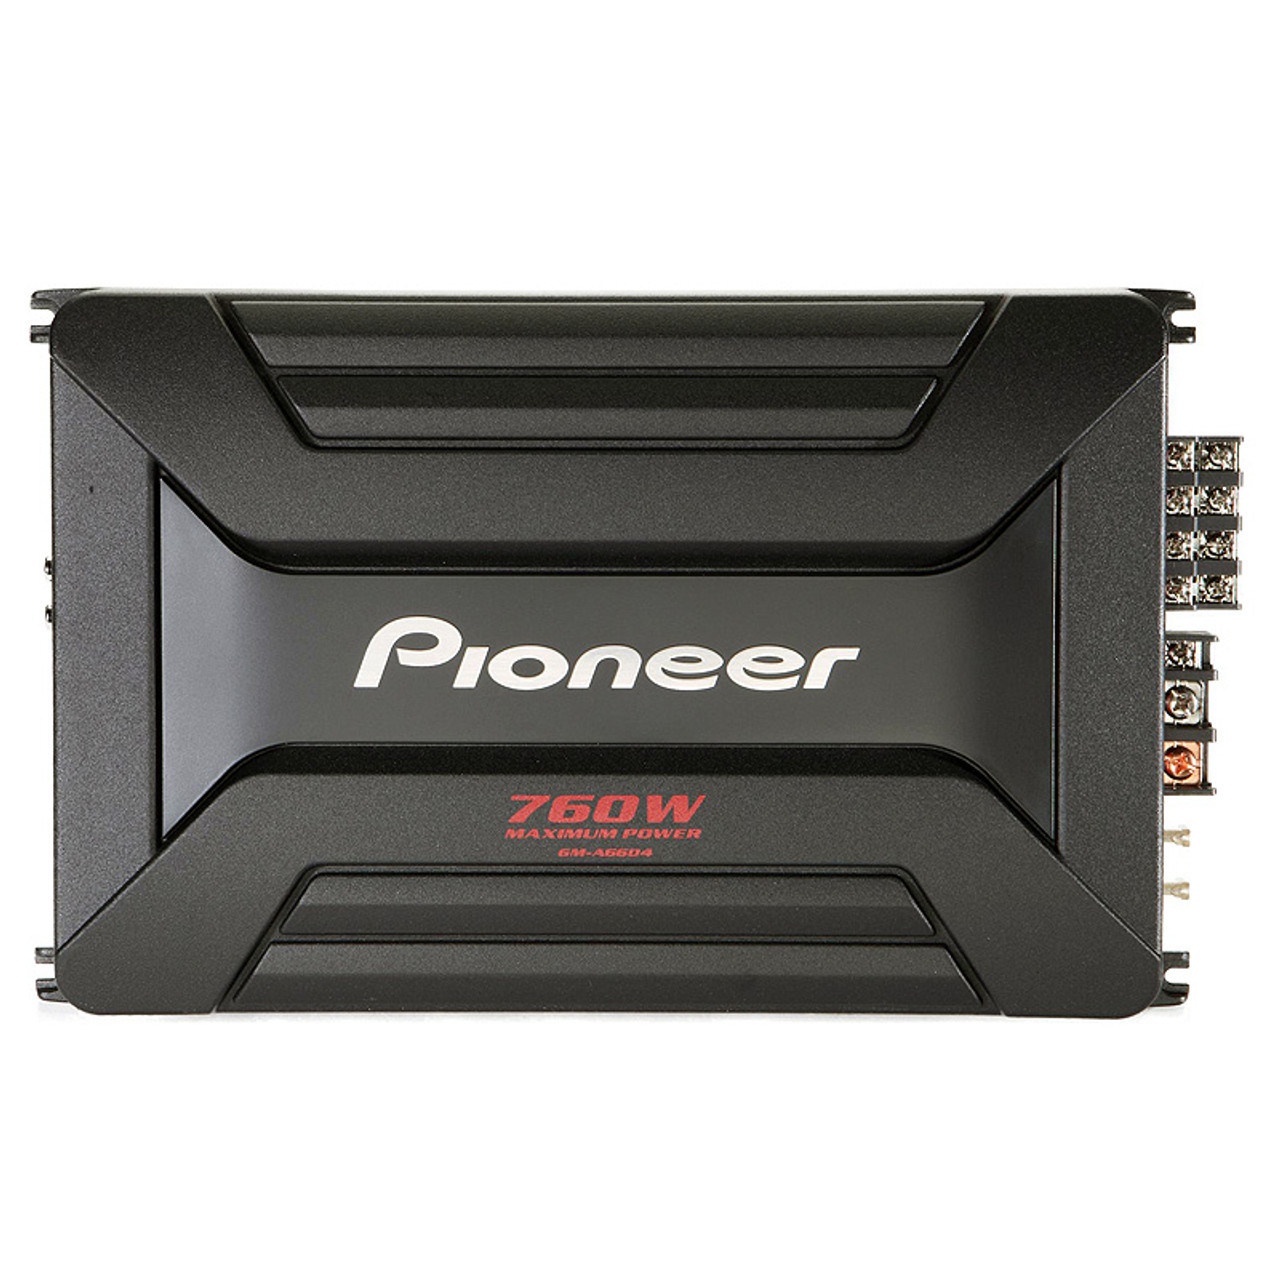 Pioneer GM-A6604